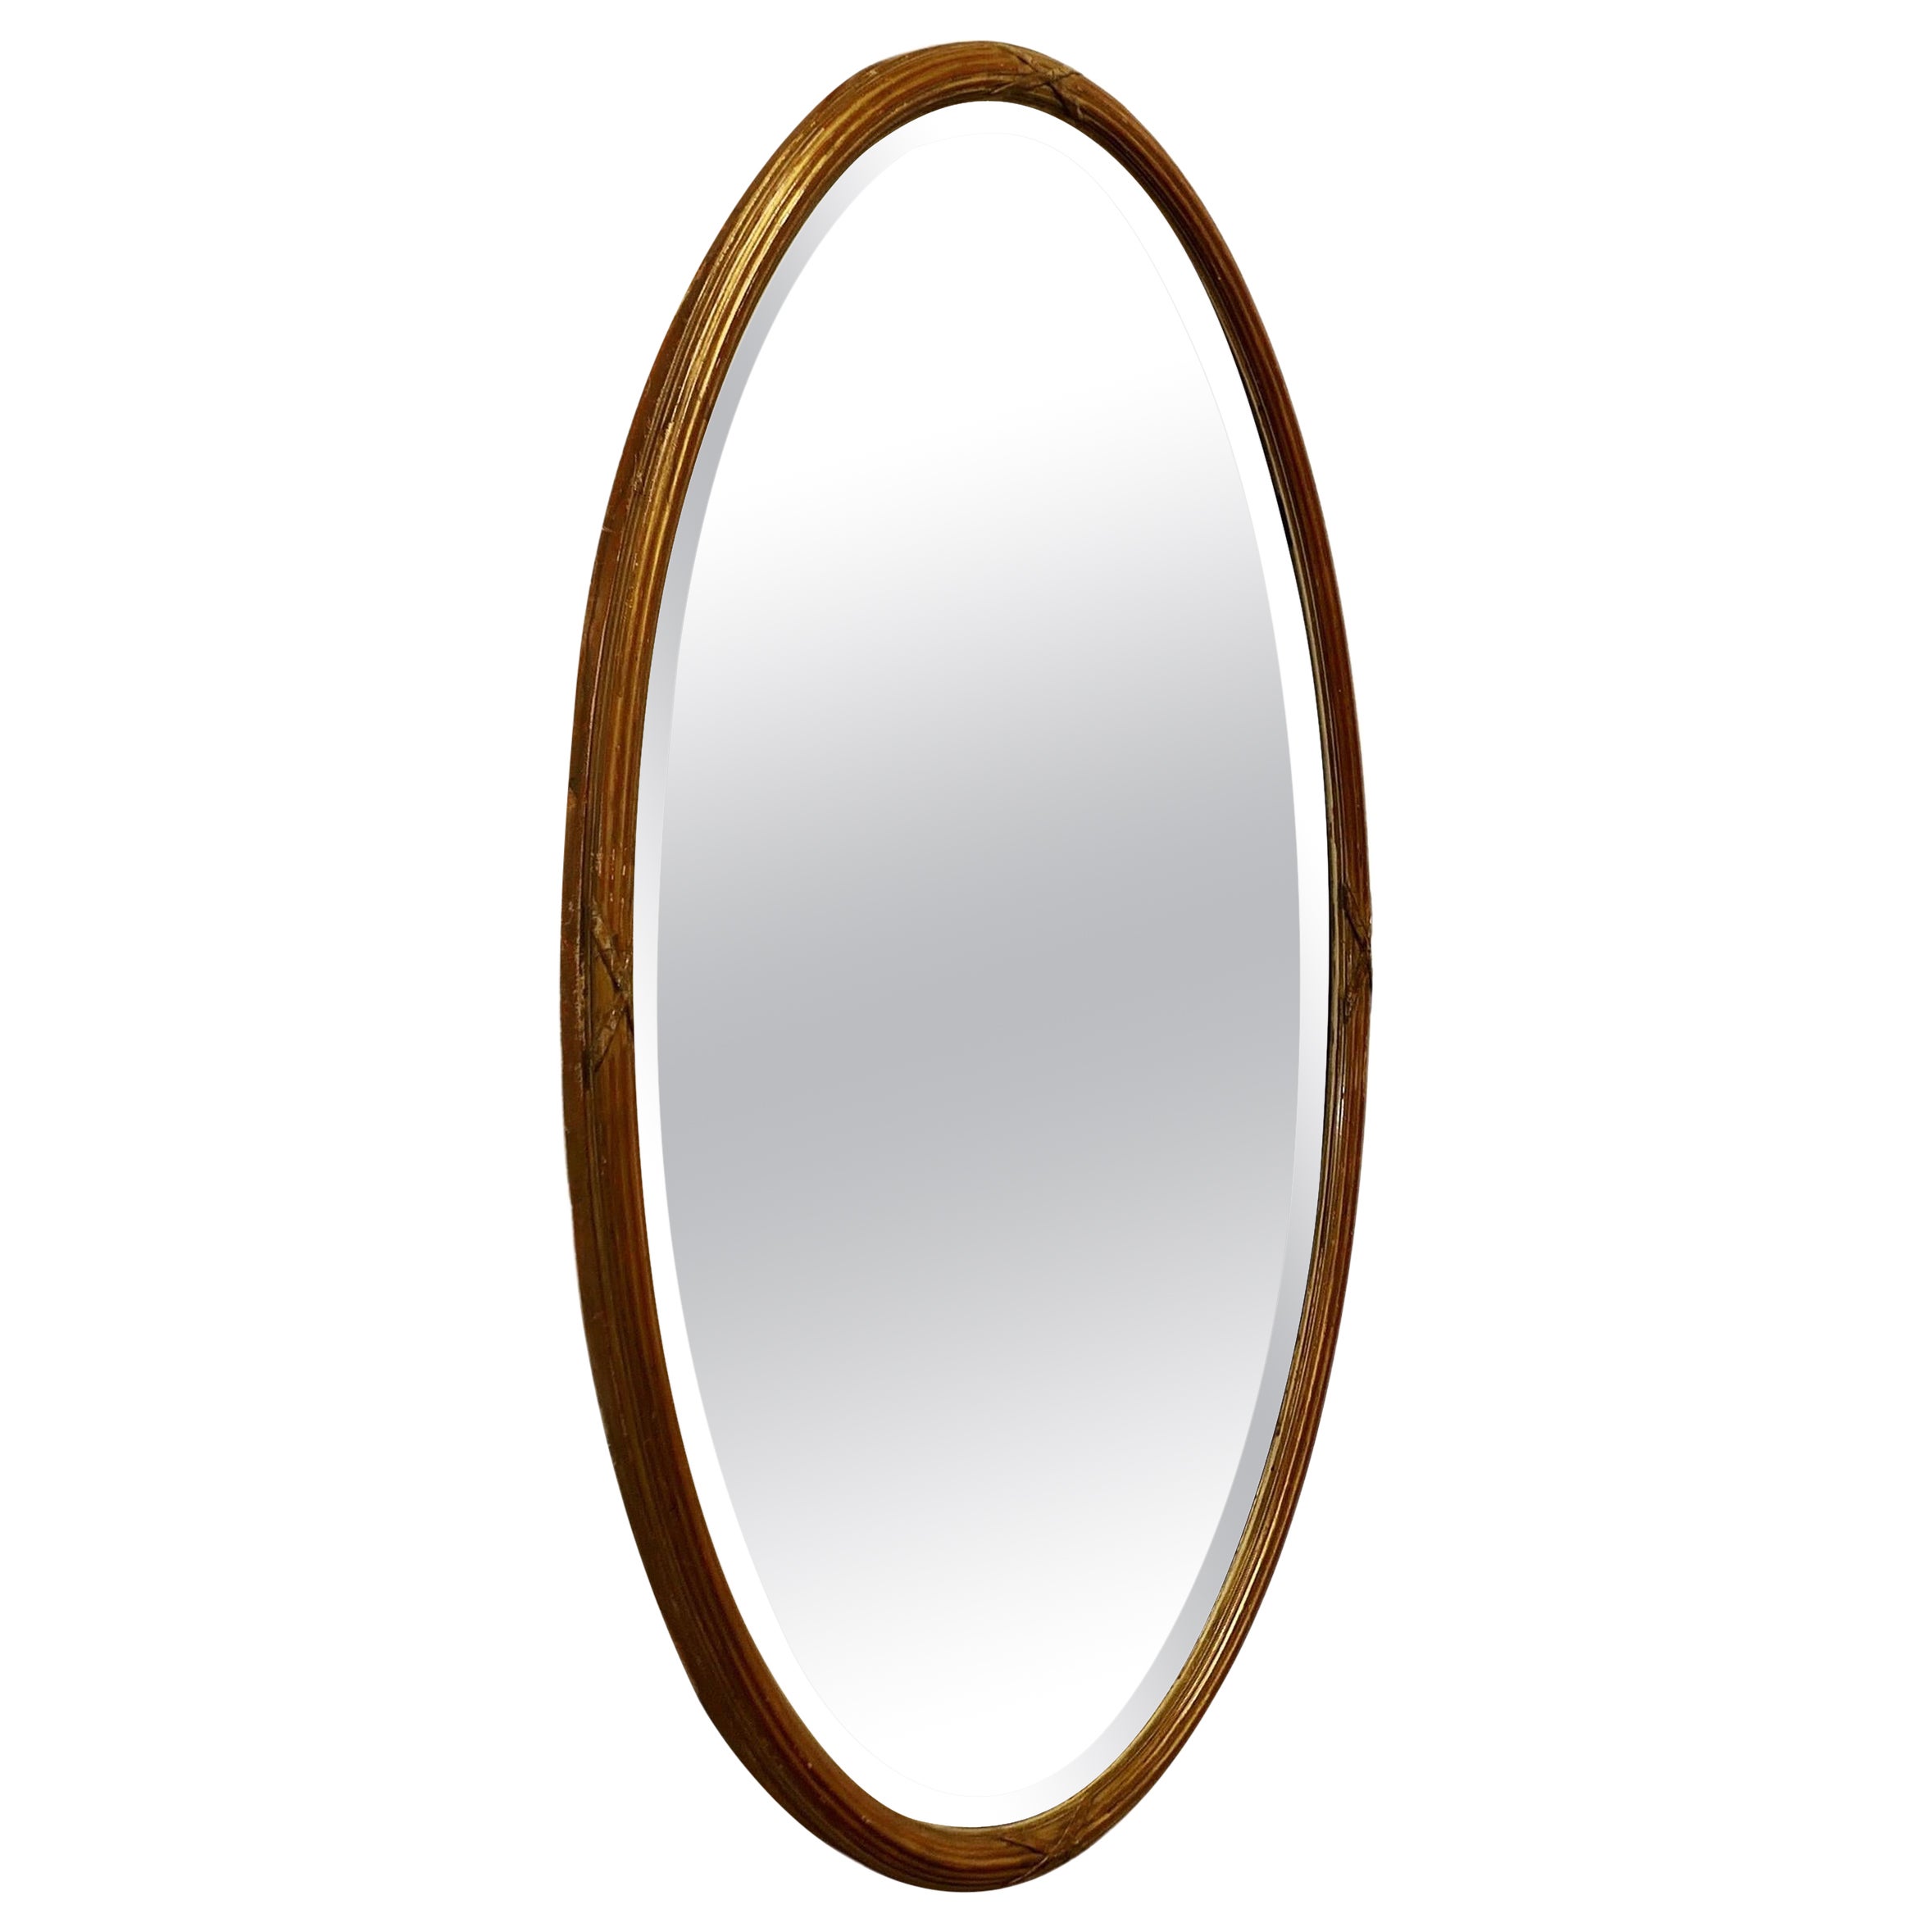 Grand miroir ovale italien doré